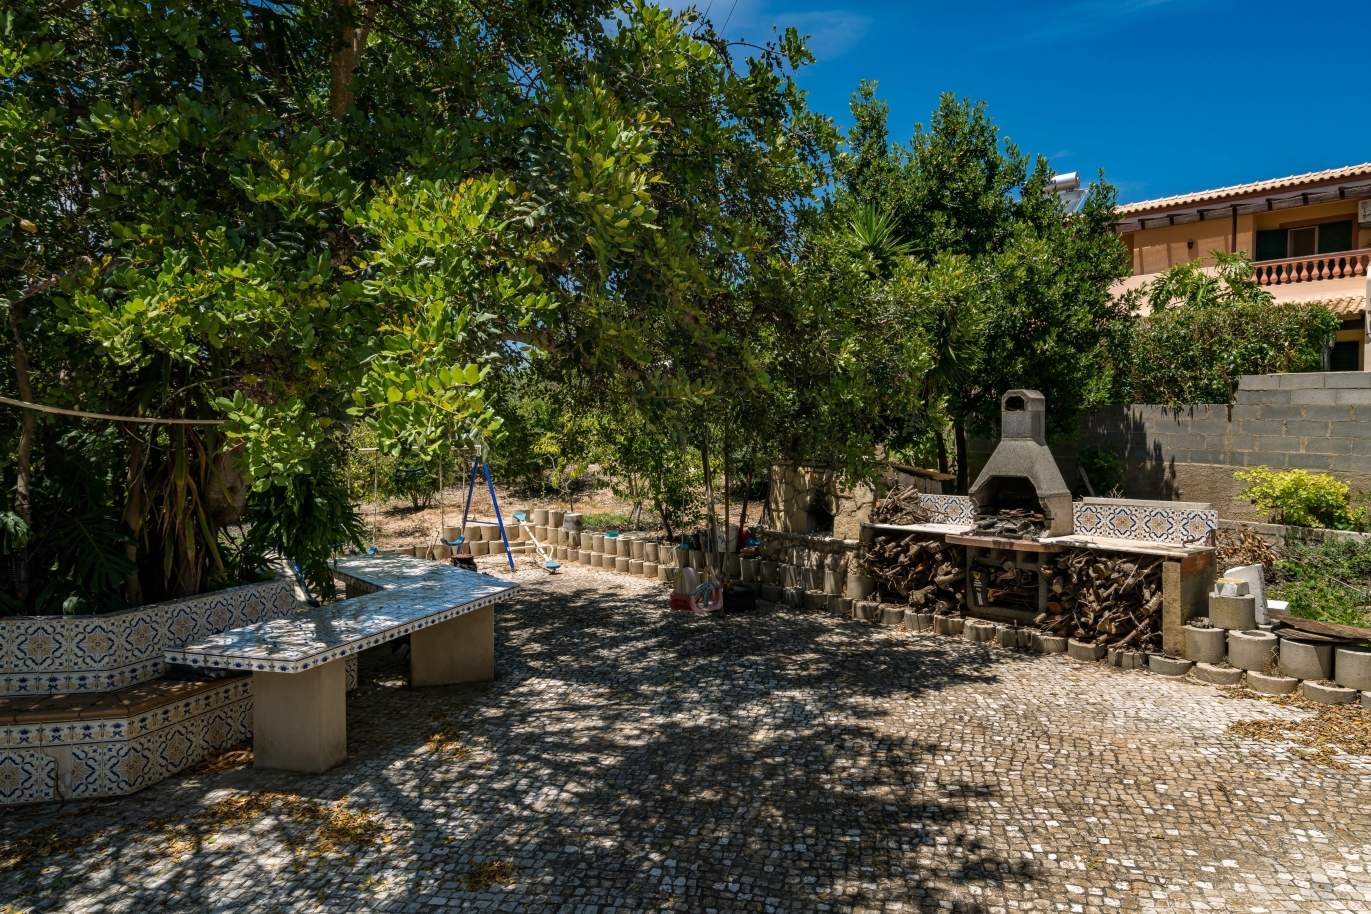 4 Bedroom Villa with plot of land, sale, Albufeira, Algarve, Portugal_143783